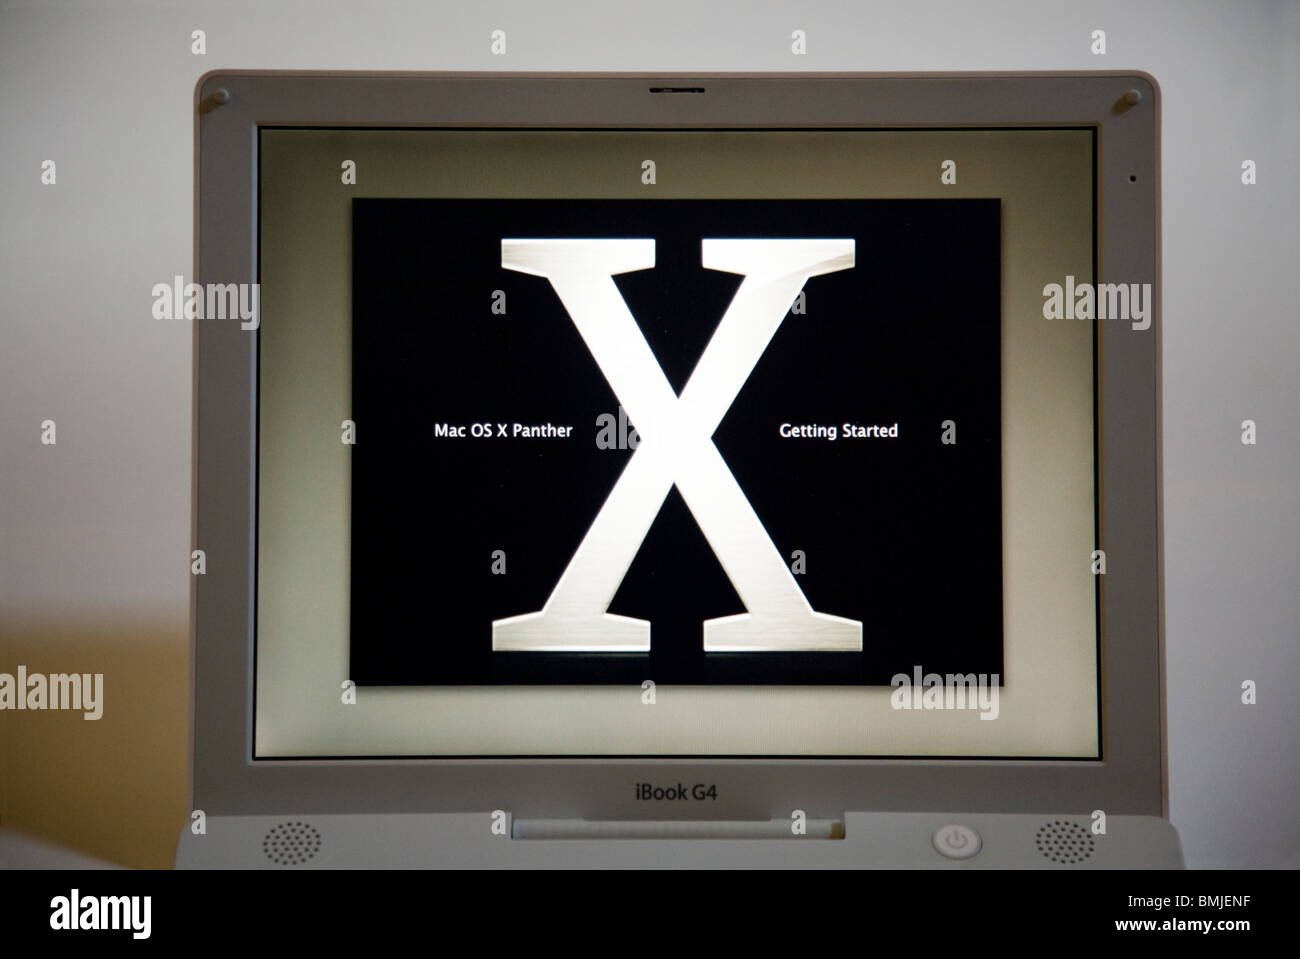 An Apple iBook G4 laptop / lap top computer start / starting up screen showing the OSX Panther logo. Stock Photo